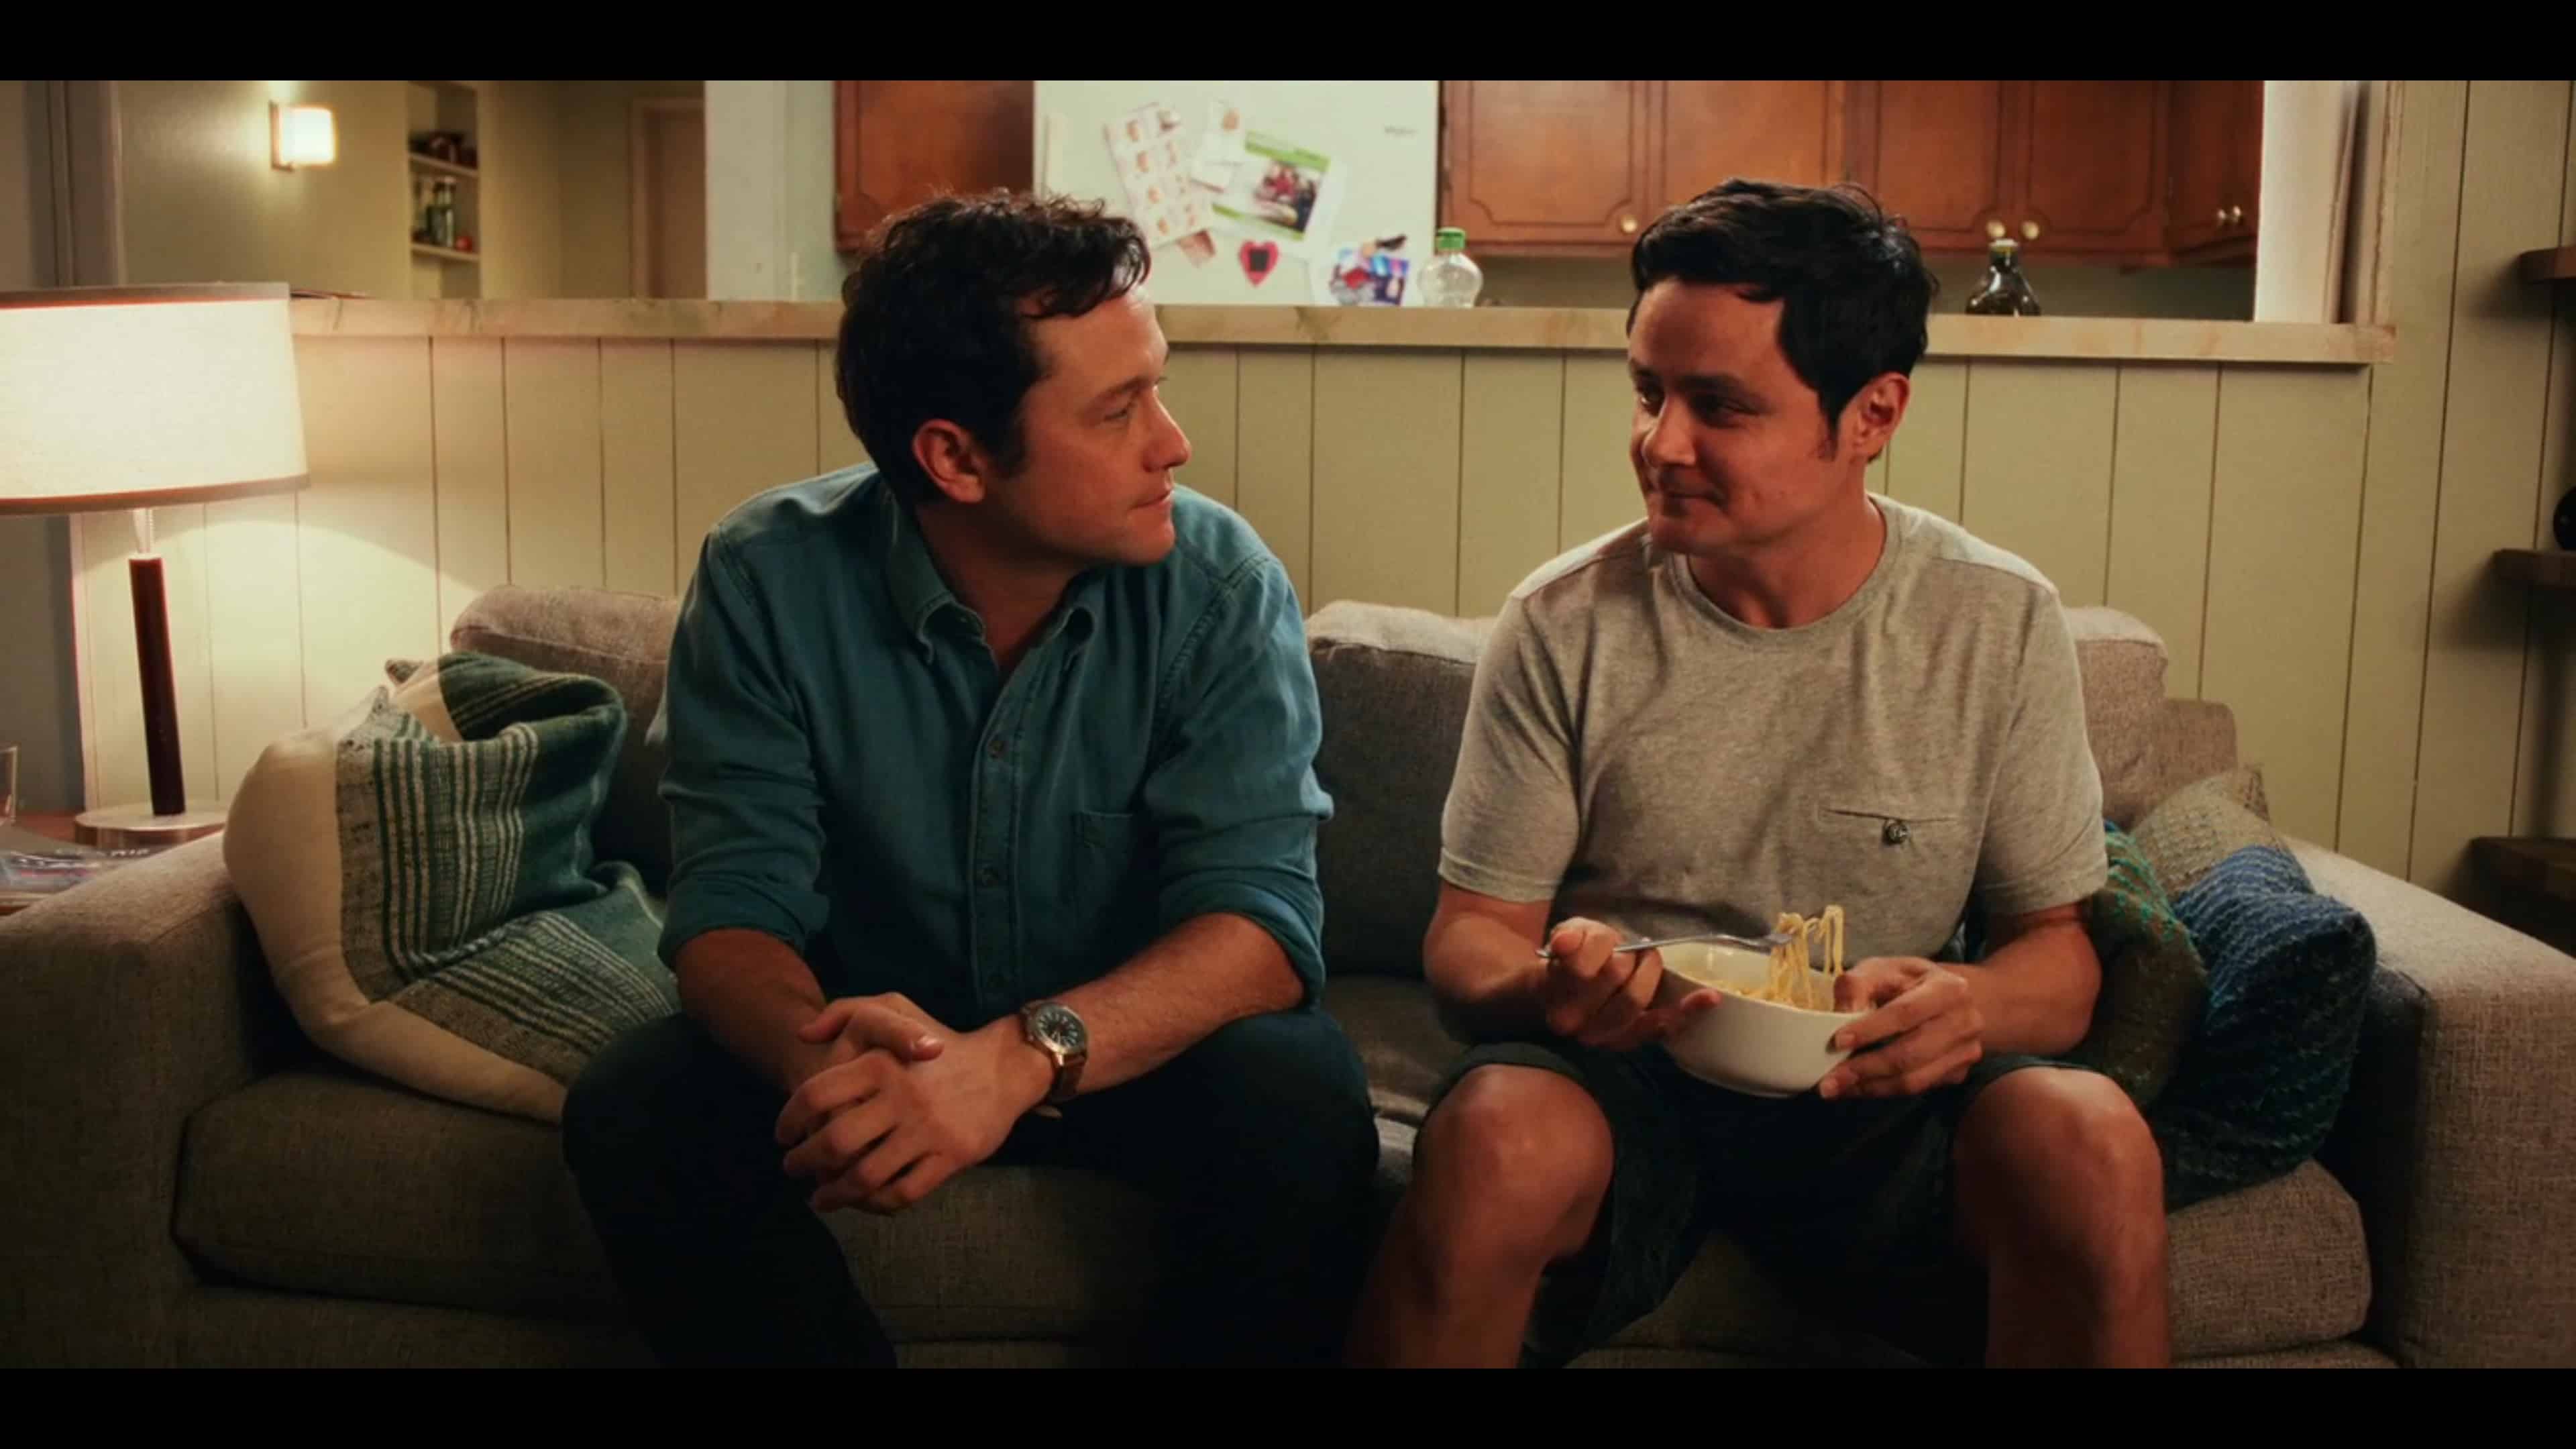 Josh (Joseph Gordon-Levitt) and Victor (Arturo Castro) talking on their couch